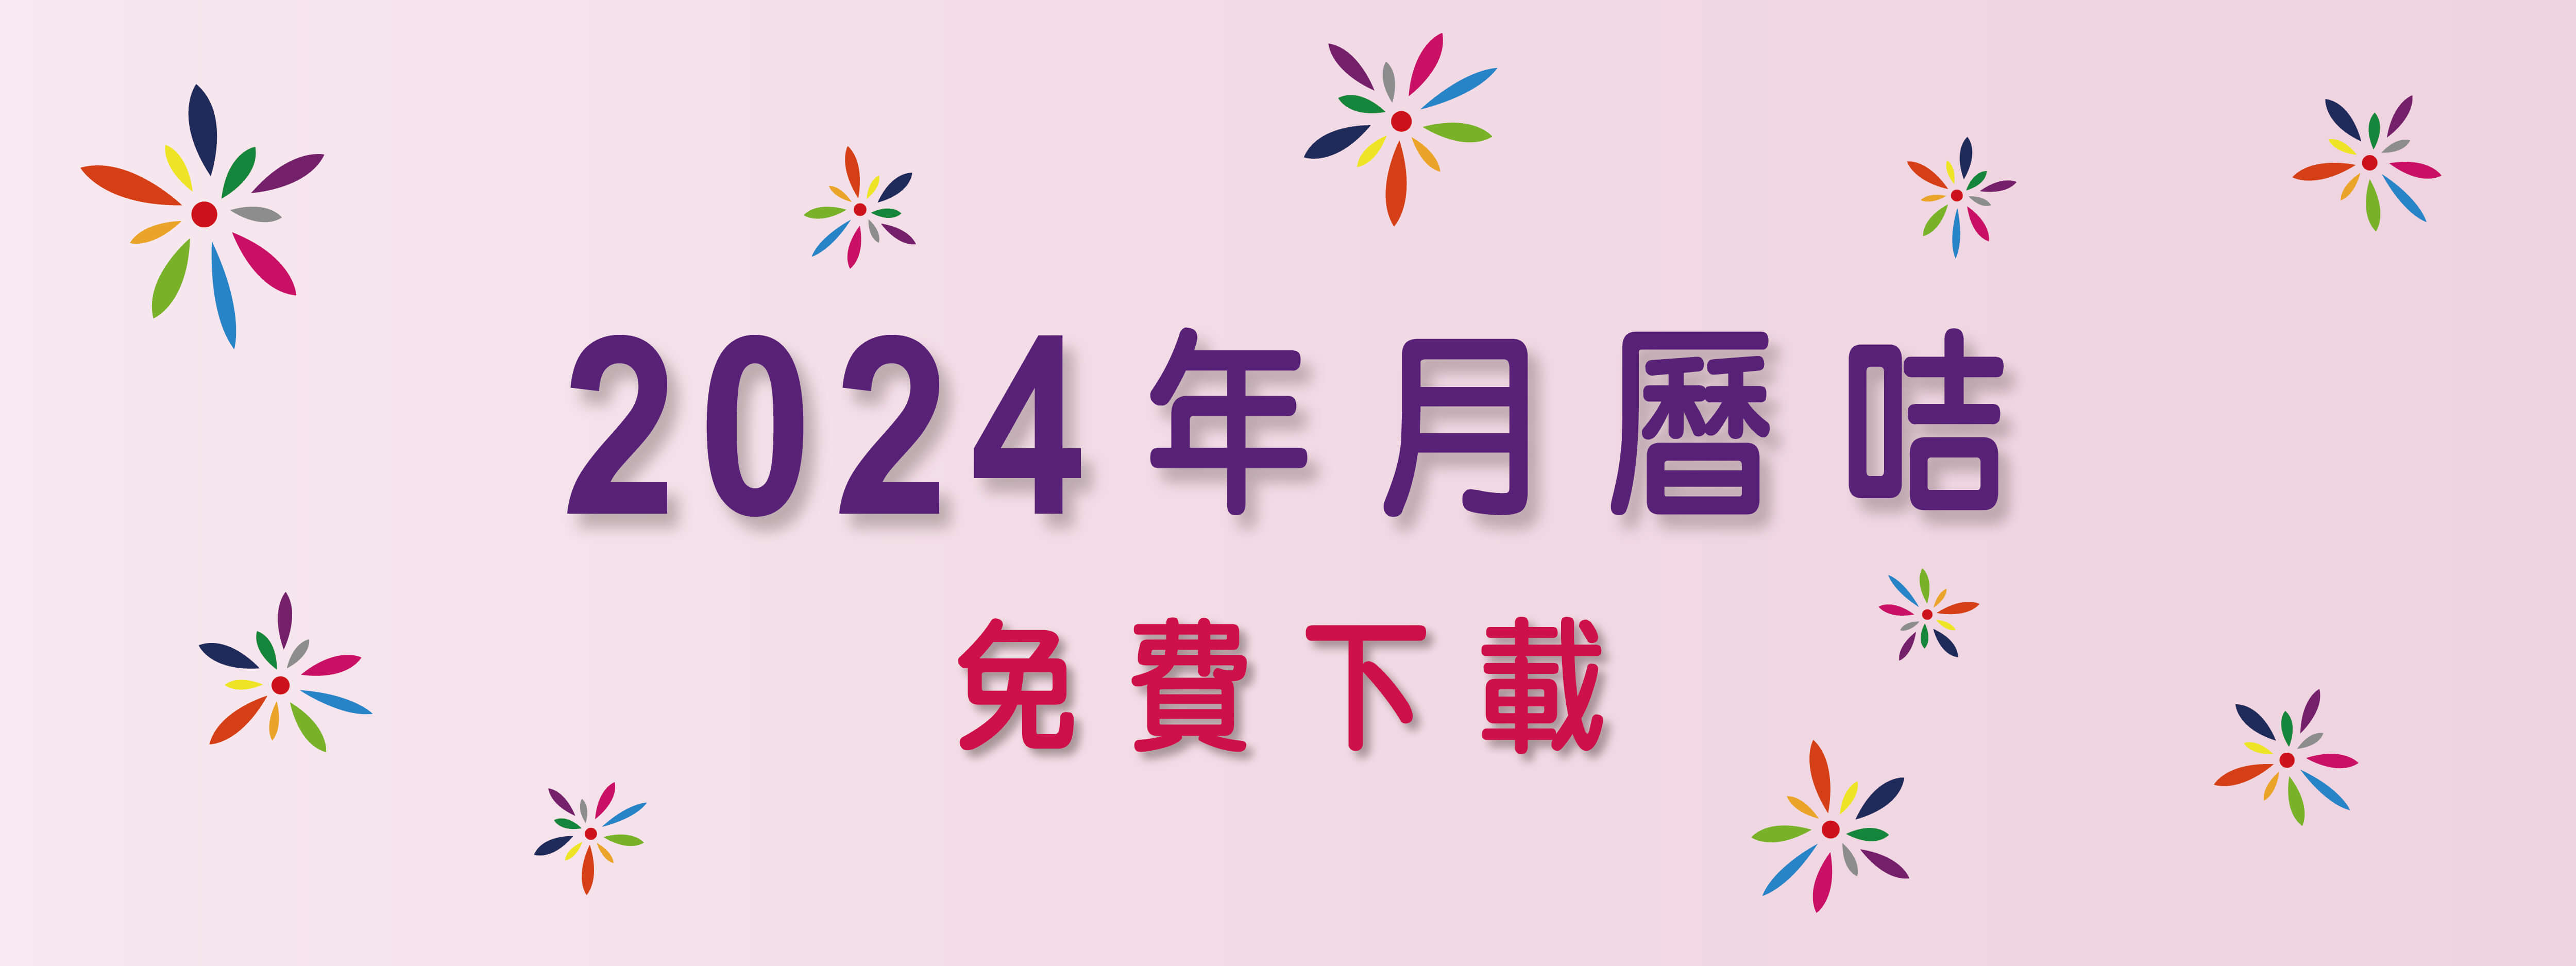 2024 calendar card download Banner-chinese version